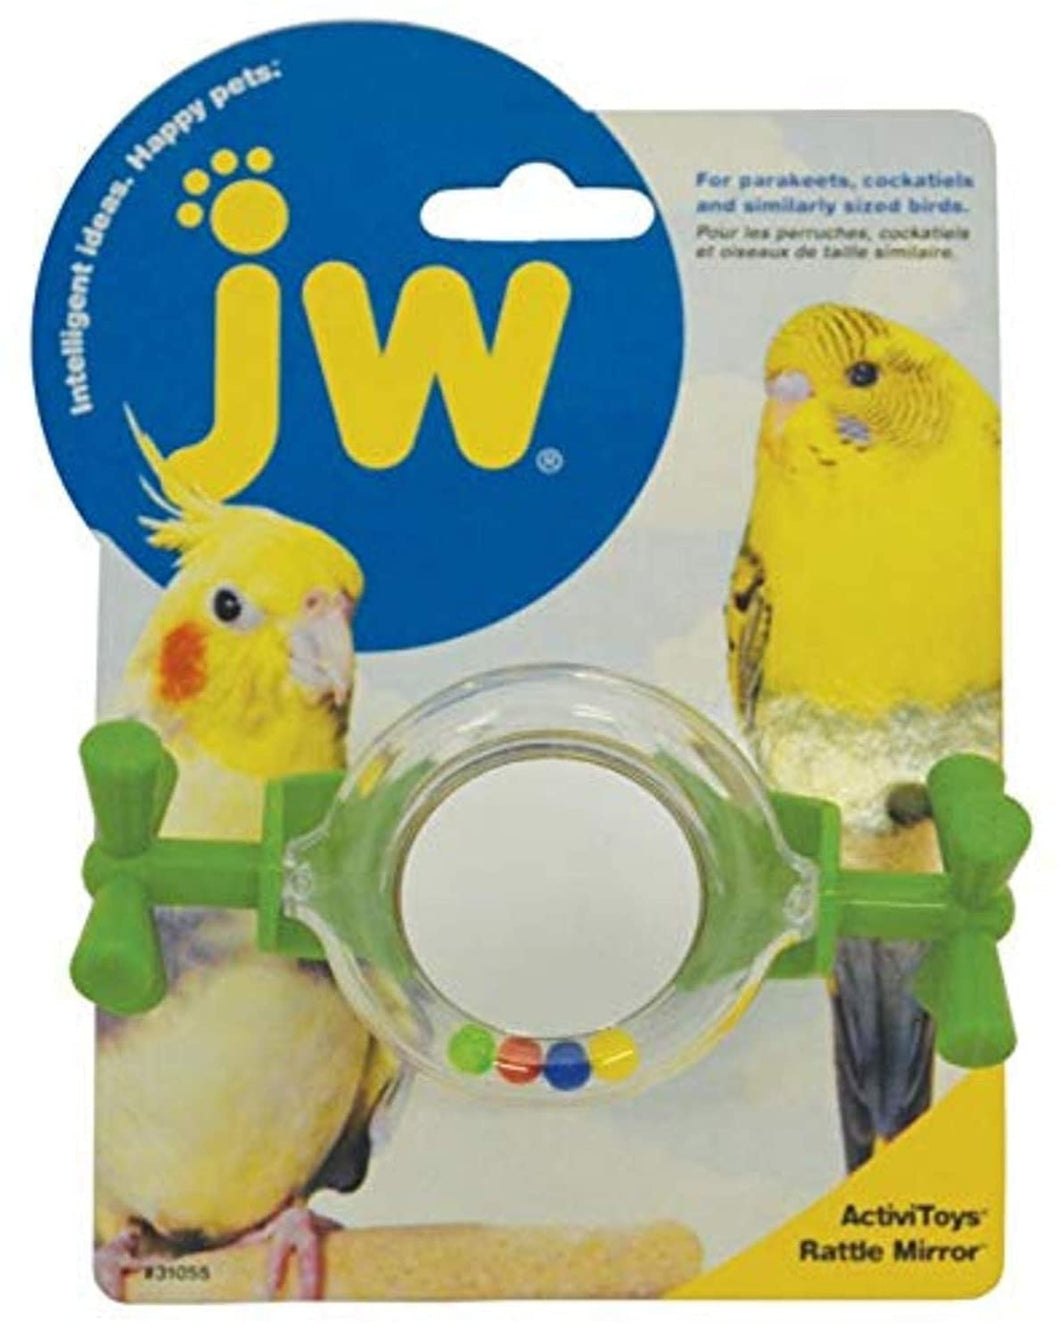 JW Activitoy Rattle Mirror